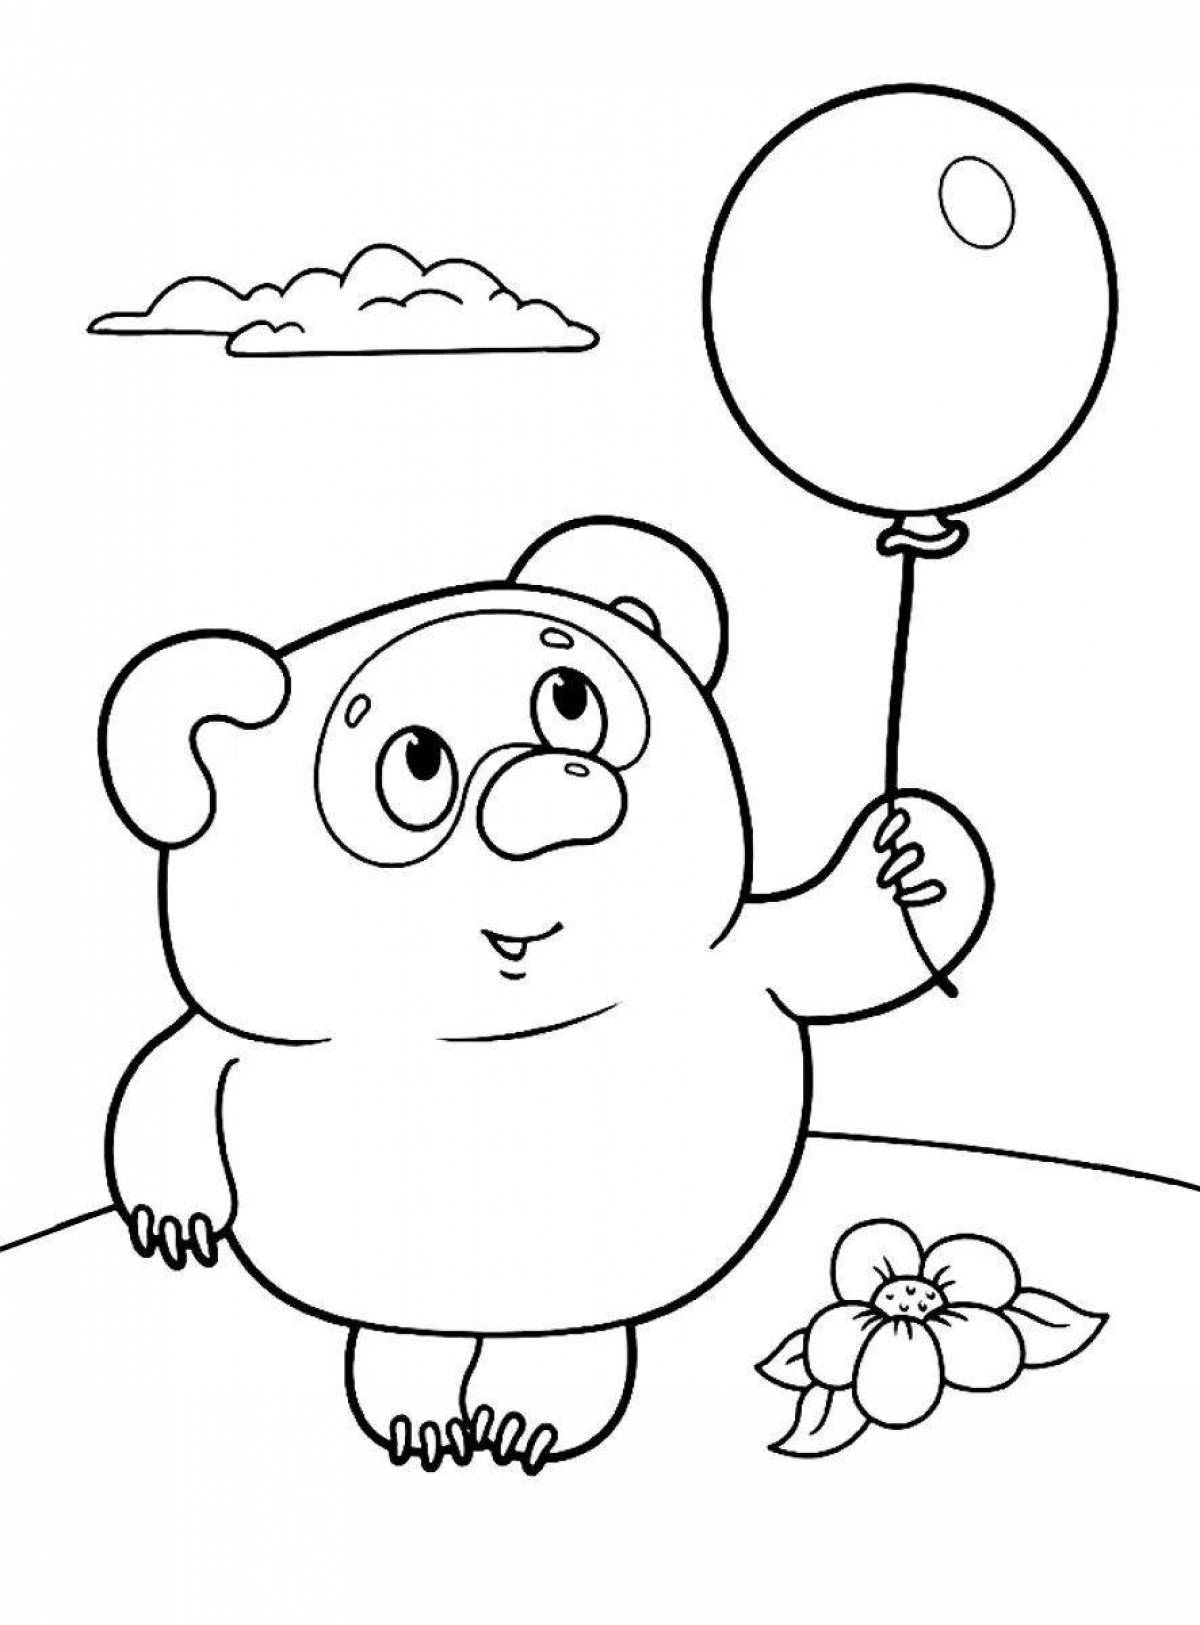 Coloring page joyful winnie the pooh